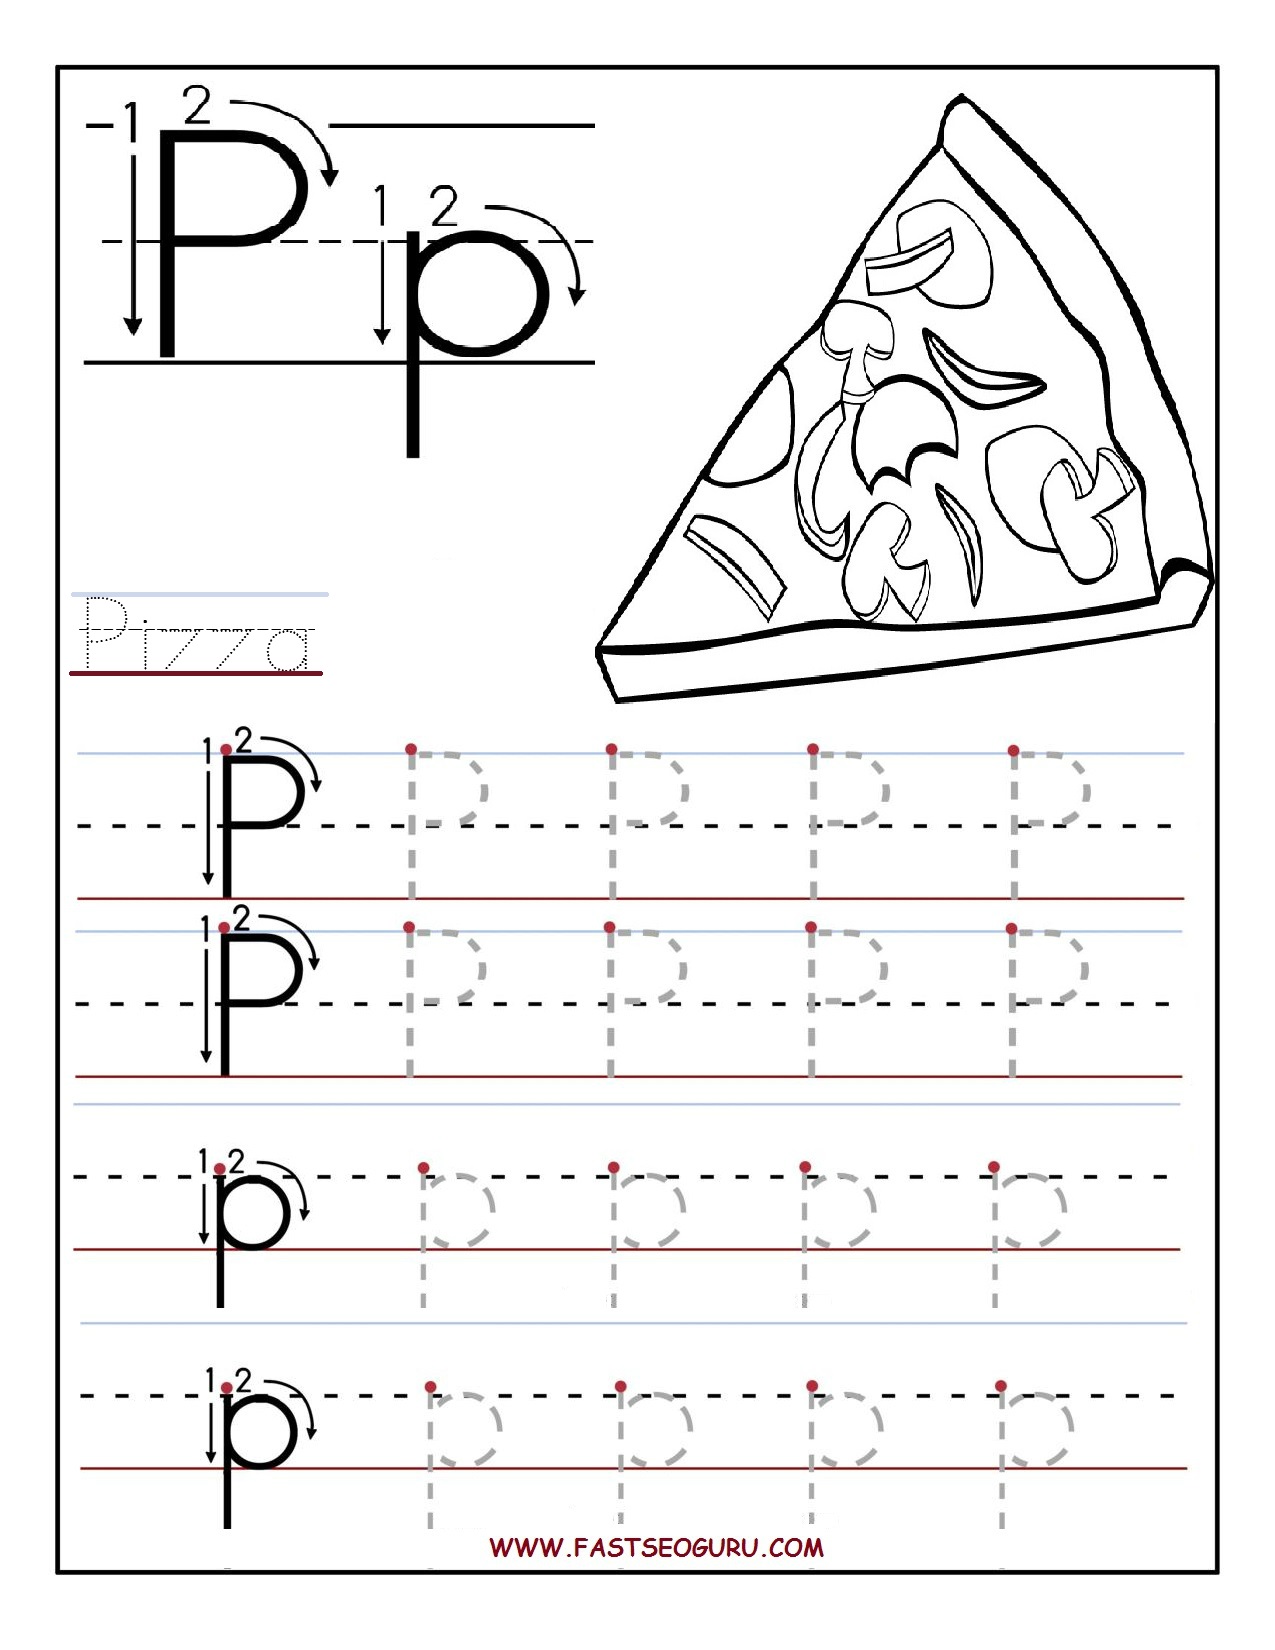 printable-letter-p-tracing-worksheets-for-preschool-jpg-1-275-1-650-pixels-tracing-worksheets